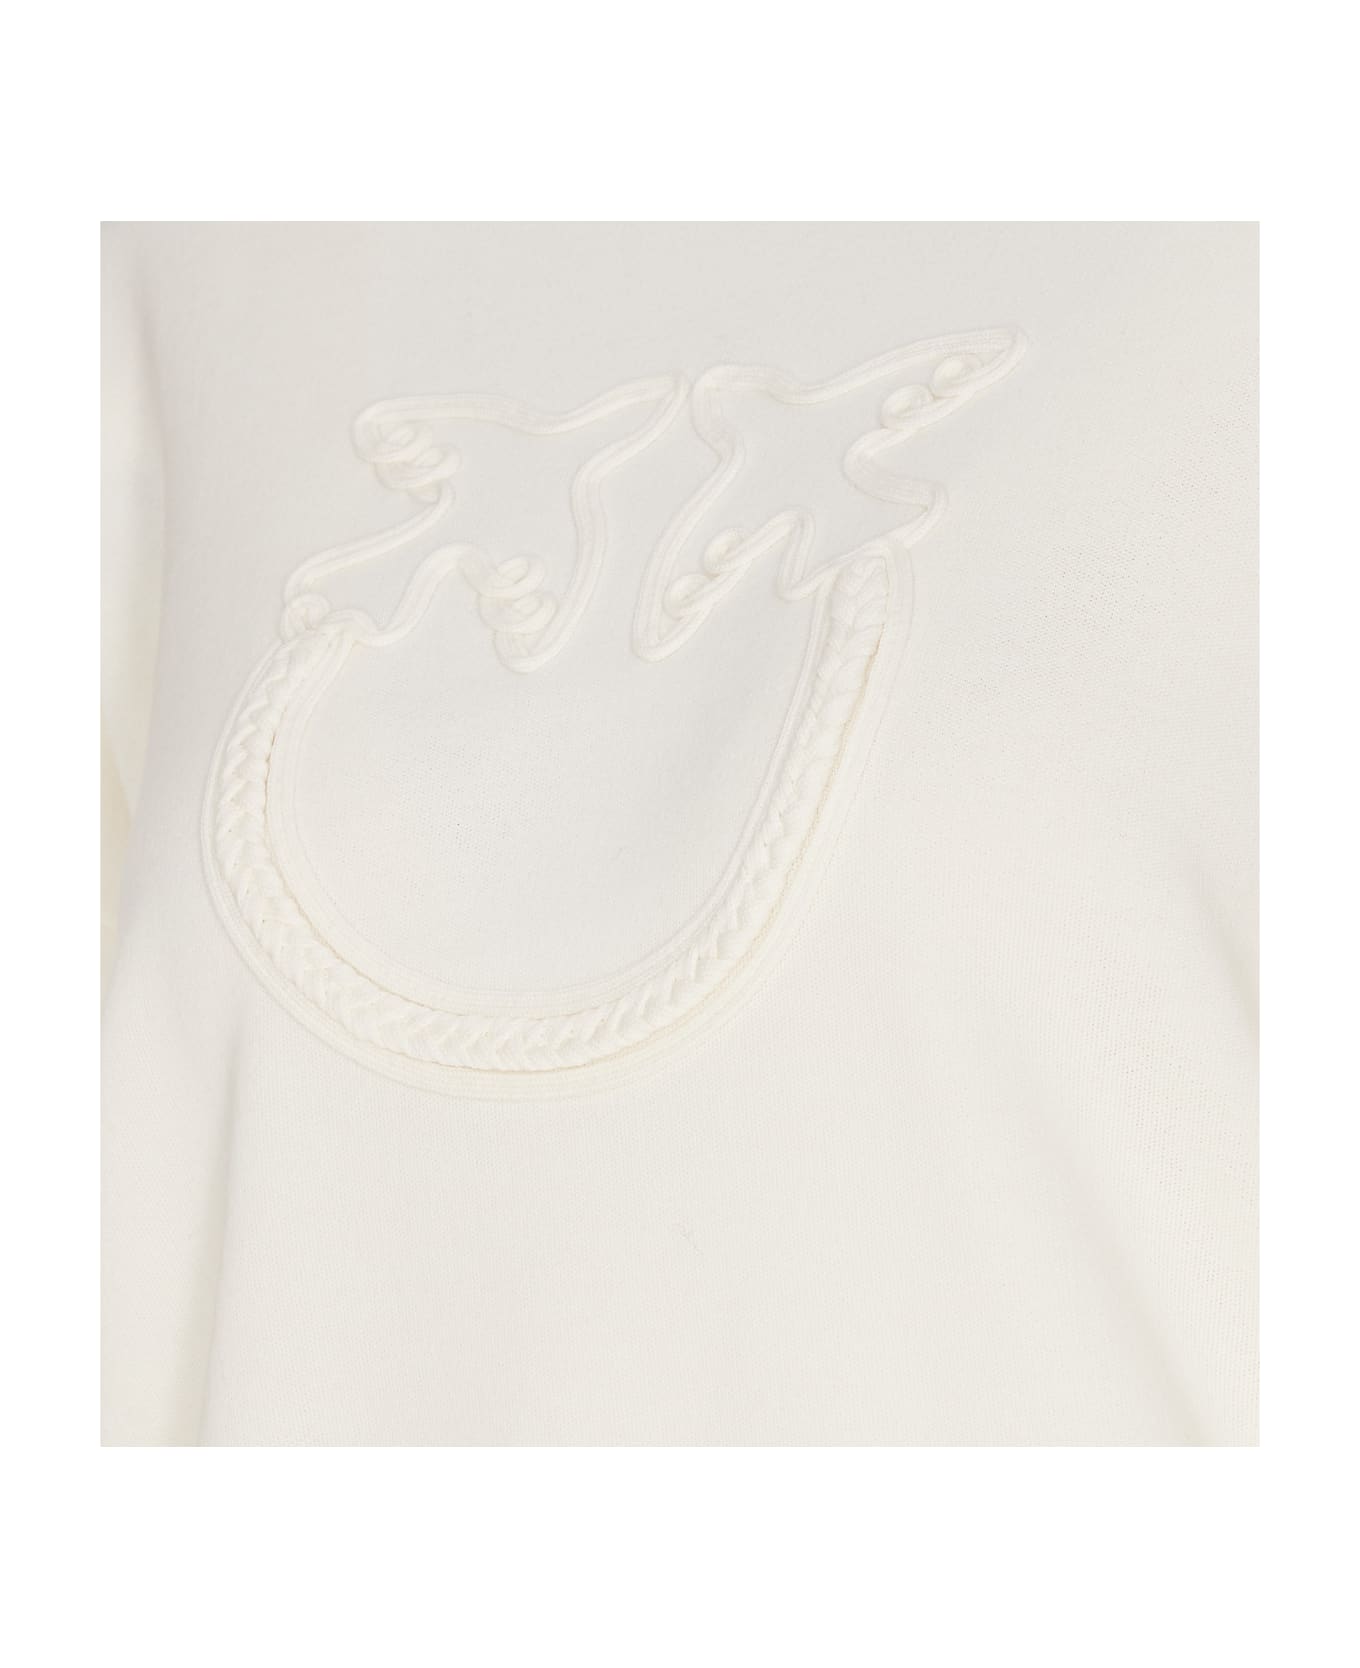 Pinko Acciuga Sweatshirt - White